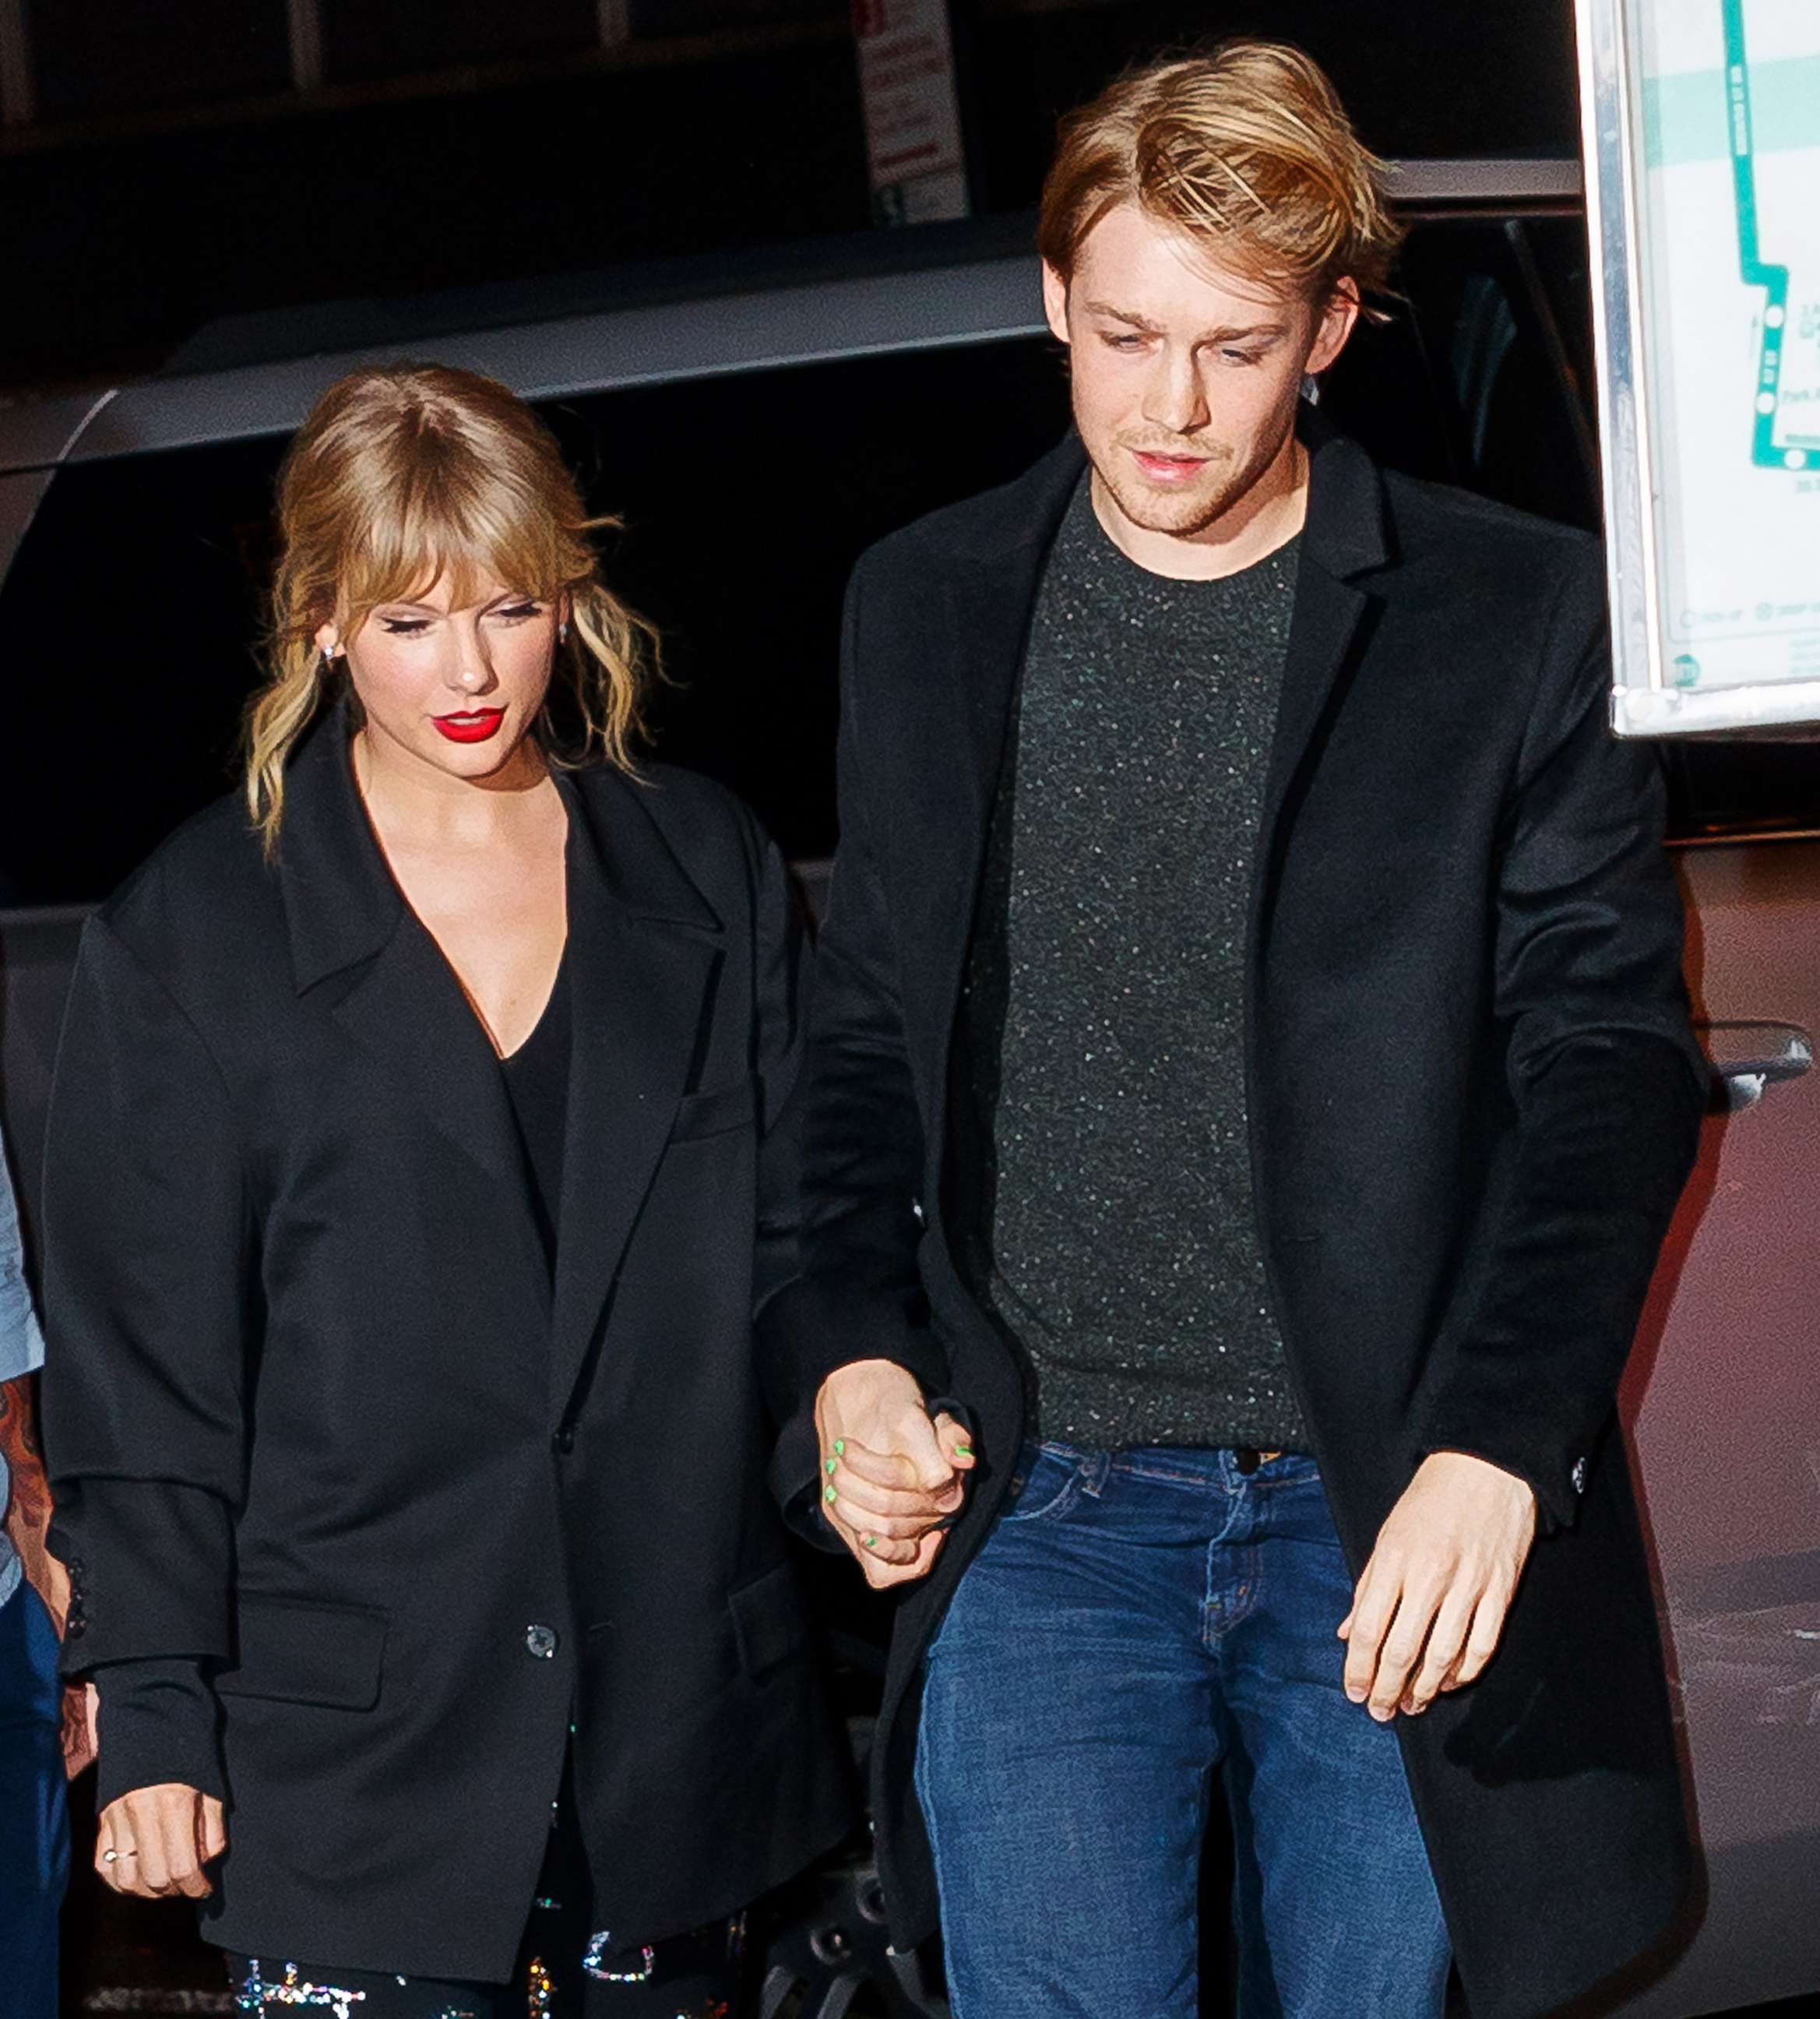 PHOTO: Taylor Swift and Joe Alwyn arrive at Zuma on Oct. 6, 2019 in New York City.